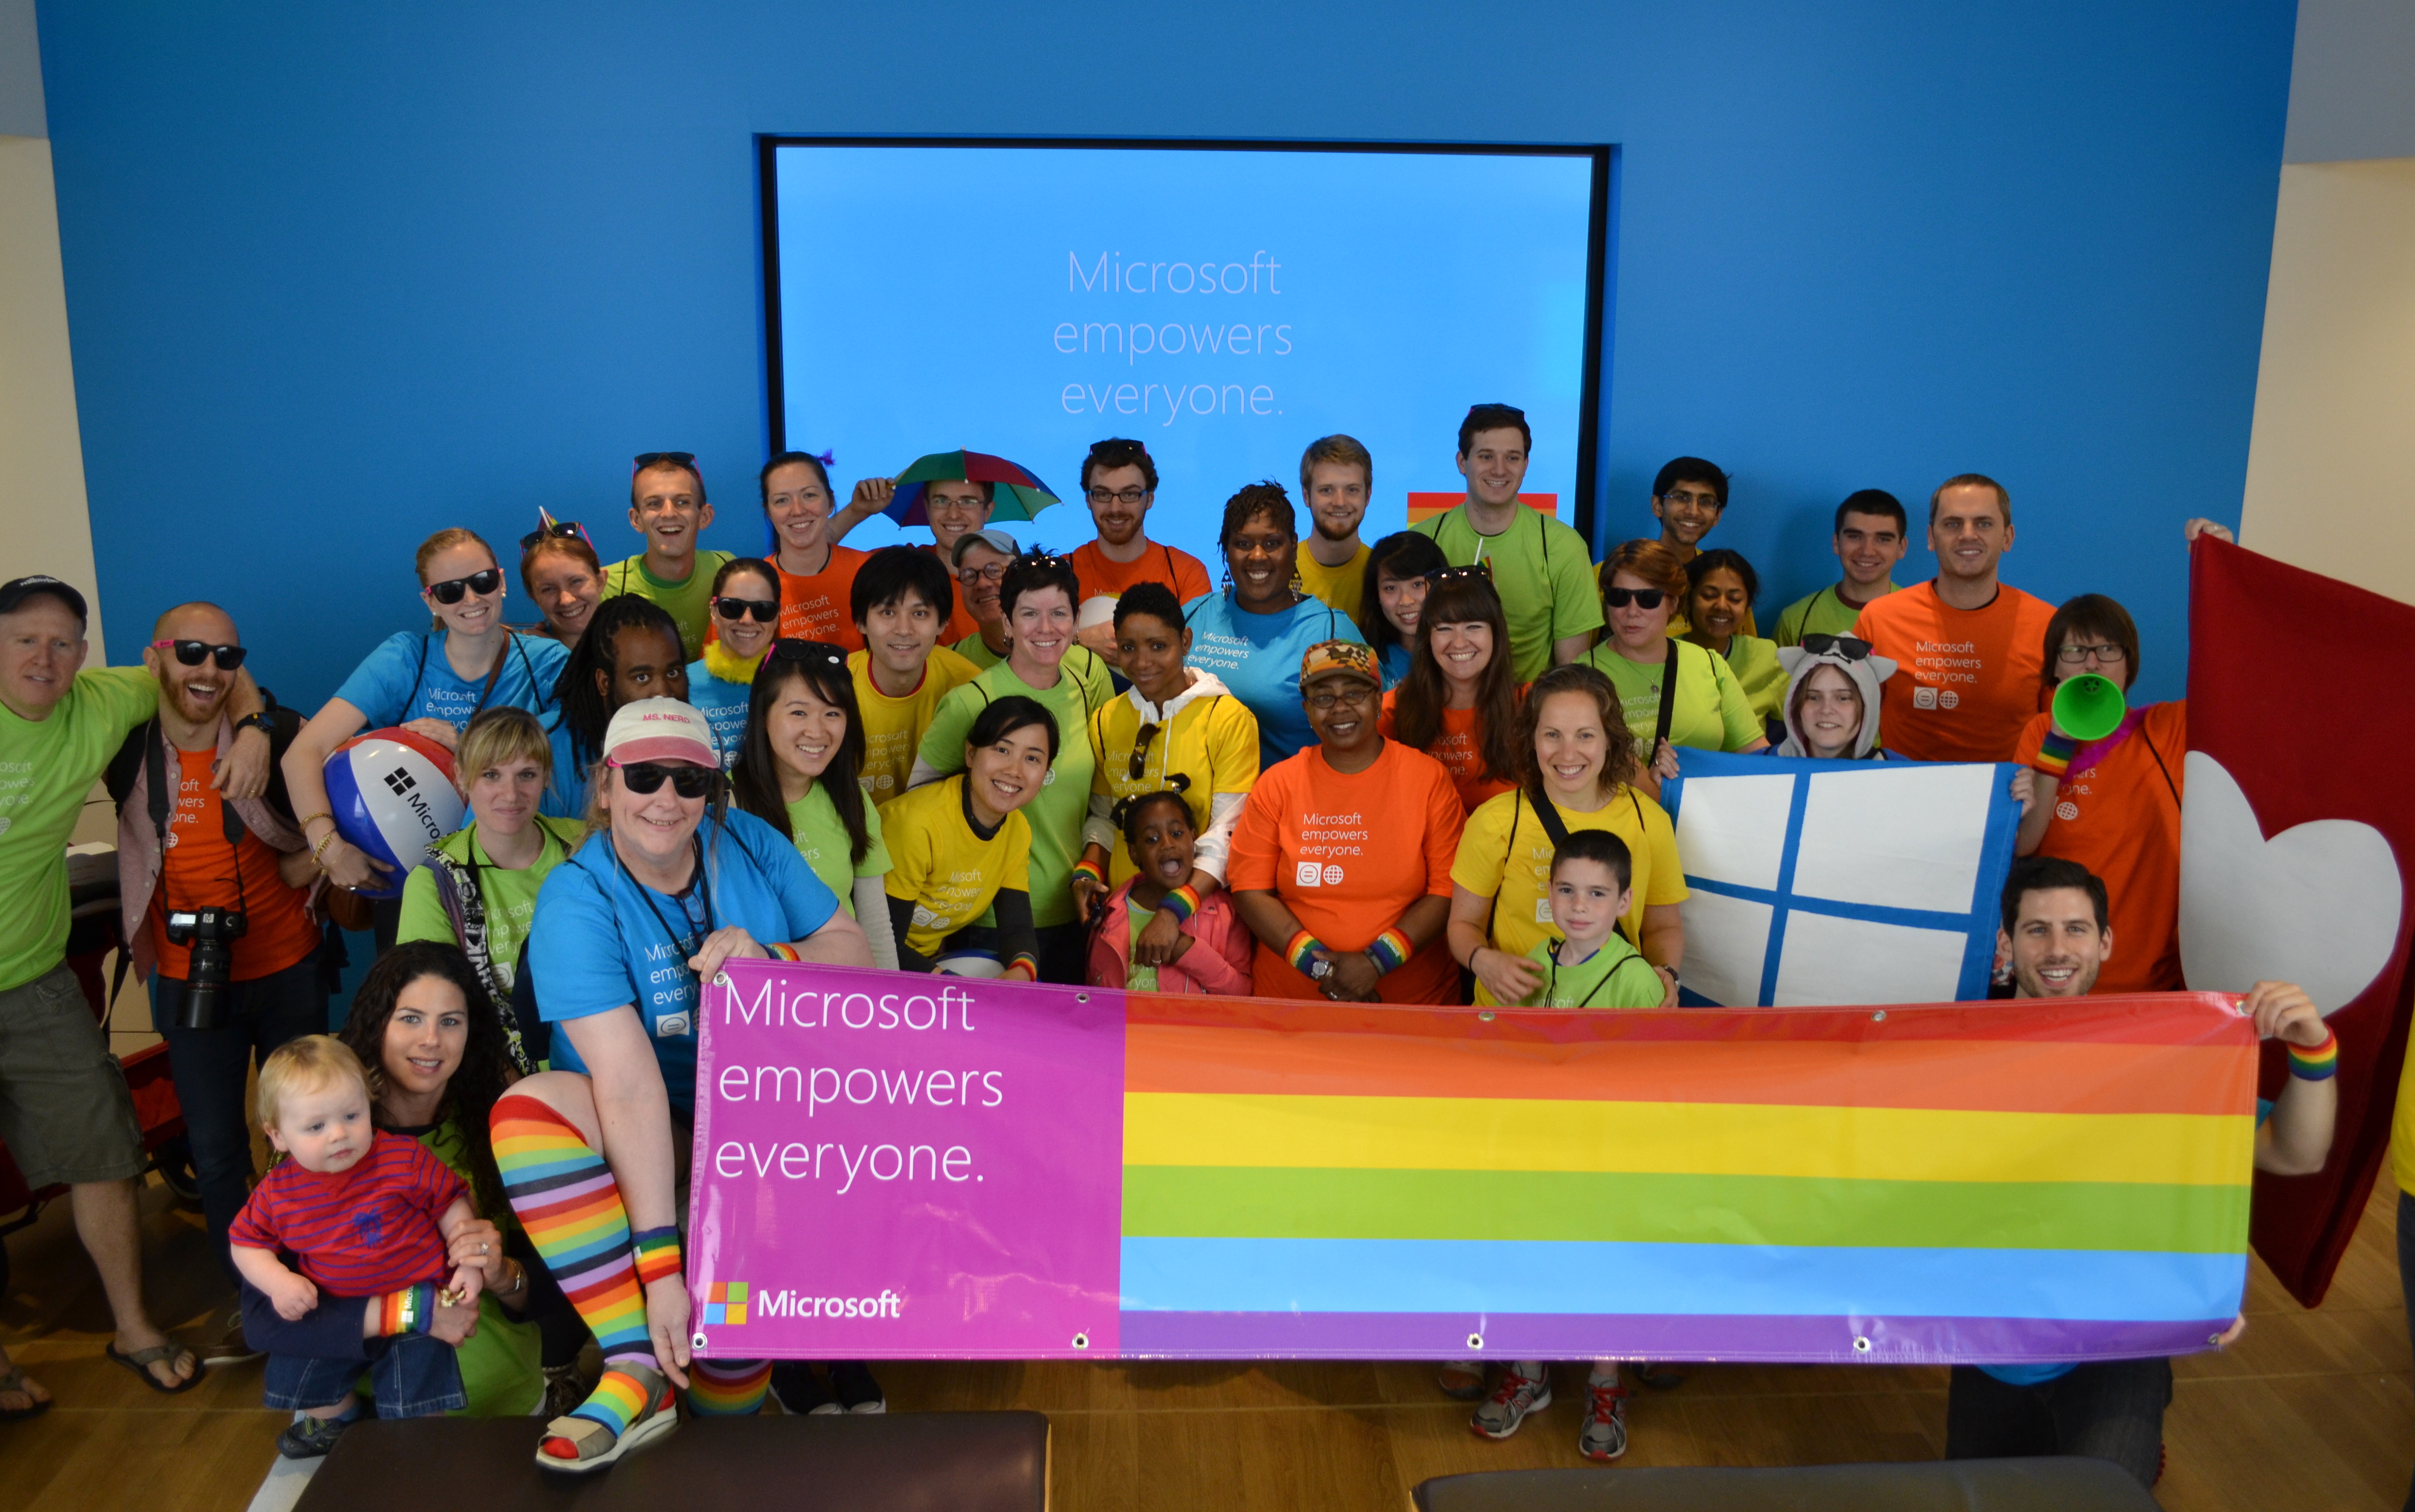 Microsoft marchers group photo